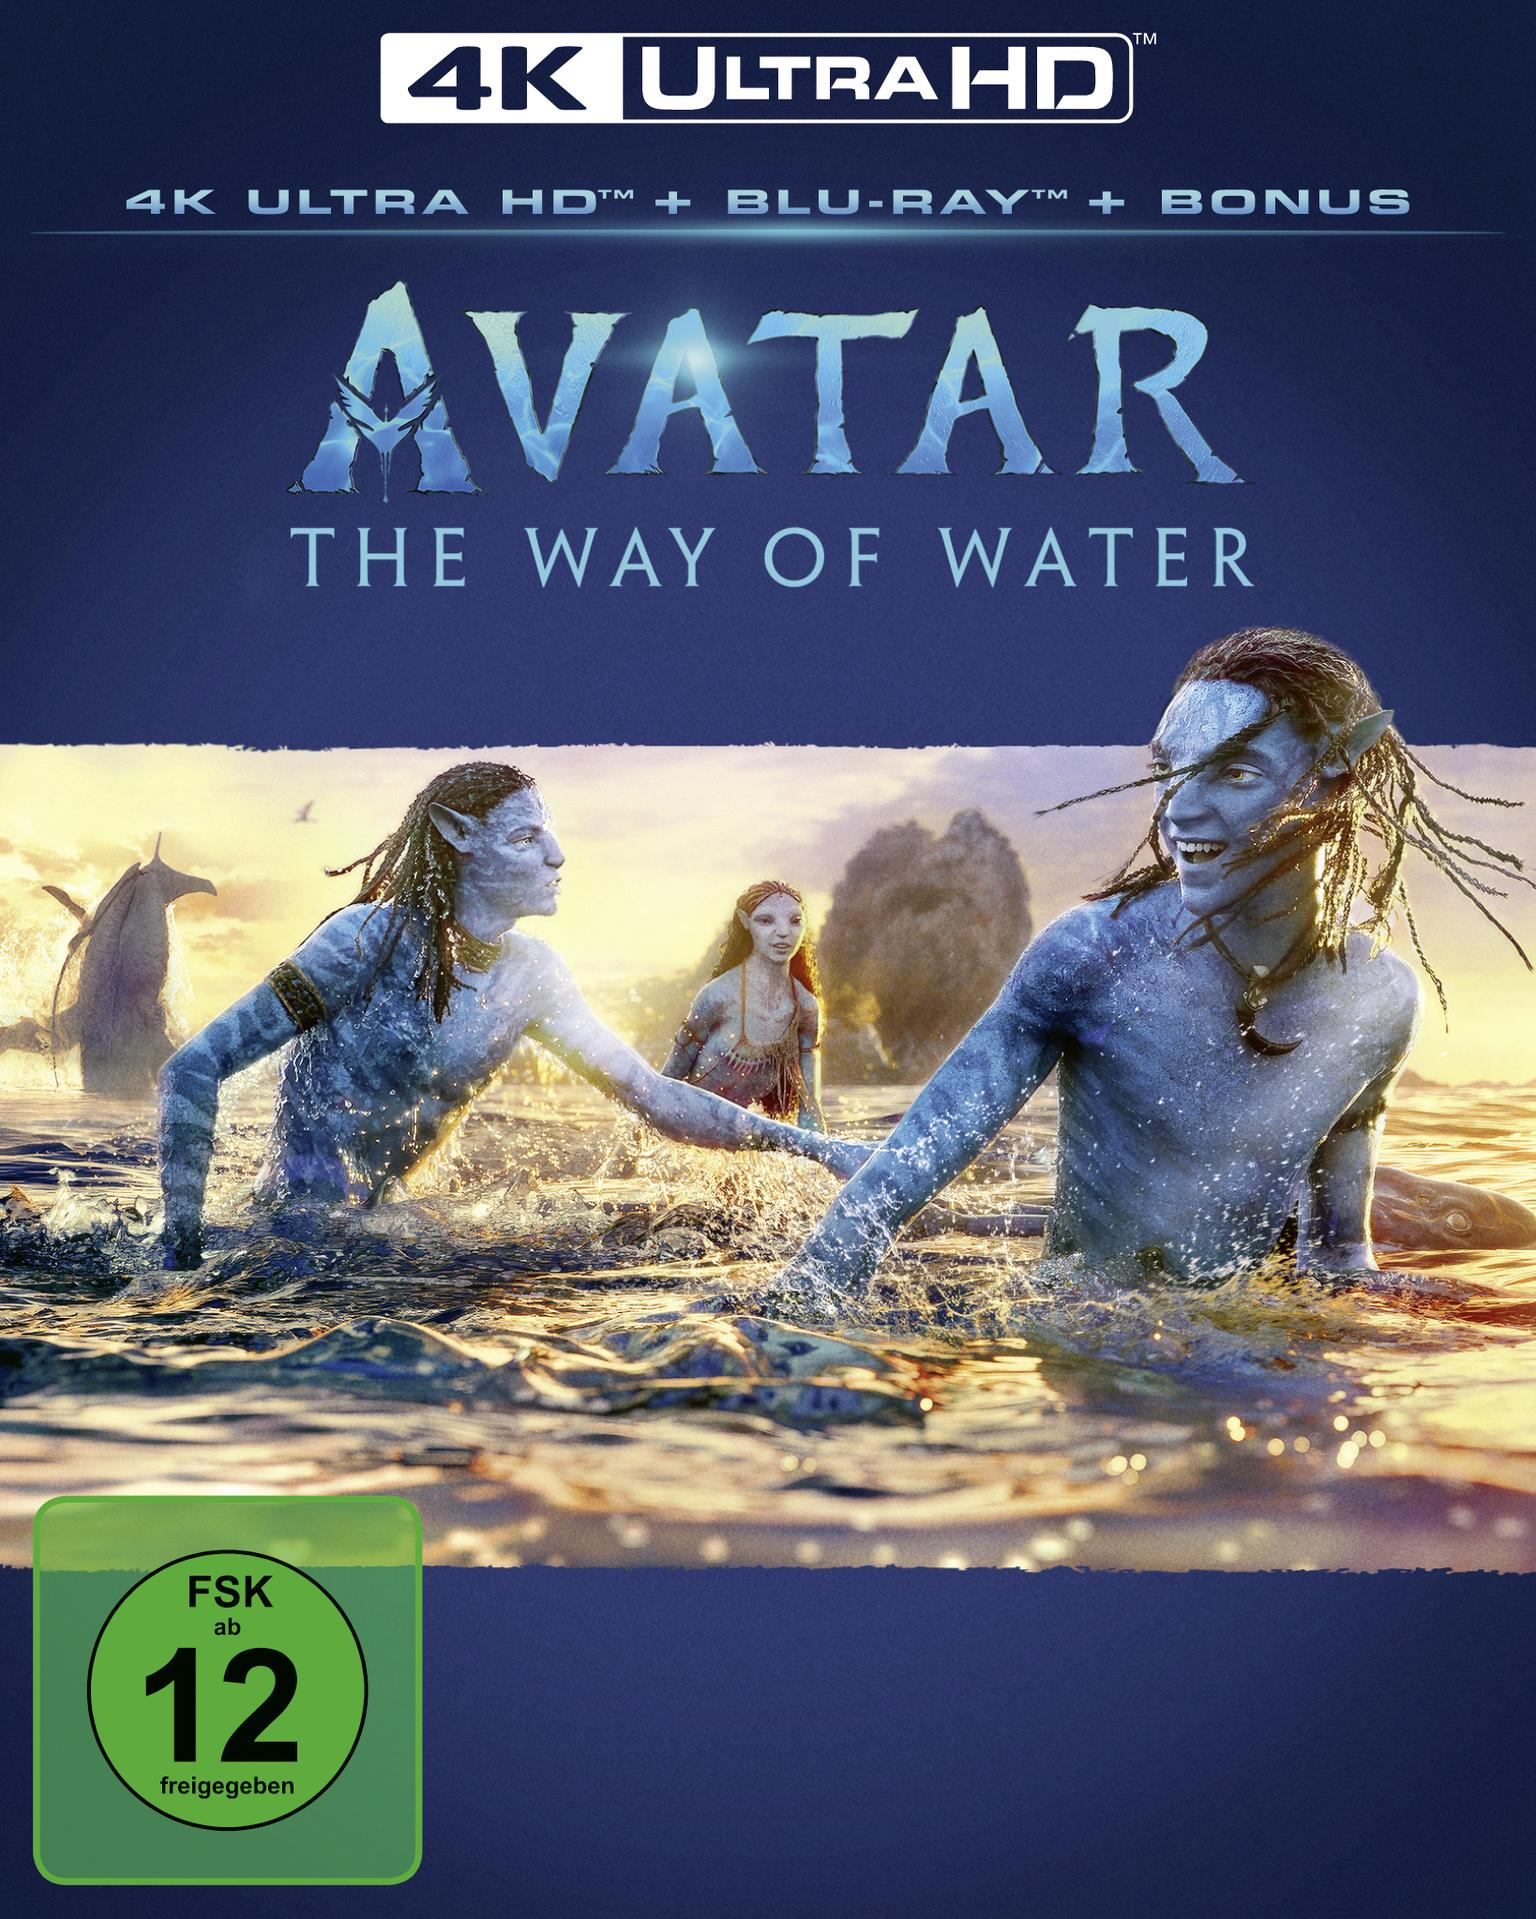 HD Way + Water of 4K Blu-ray Ultra Blu-ray Avatar: The